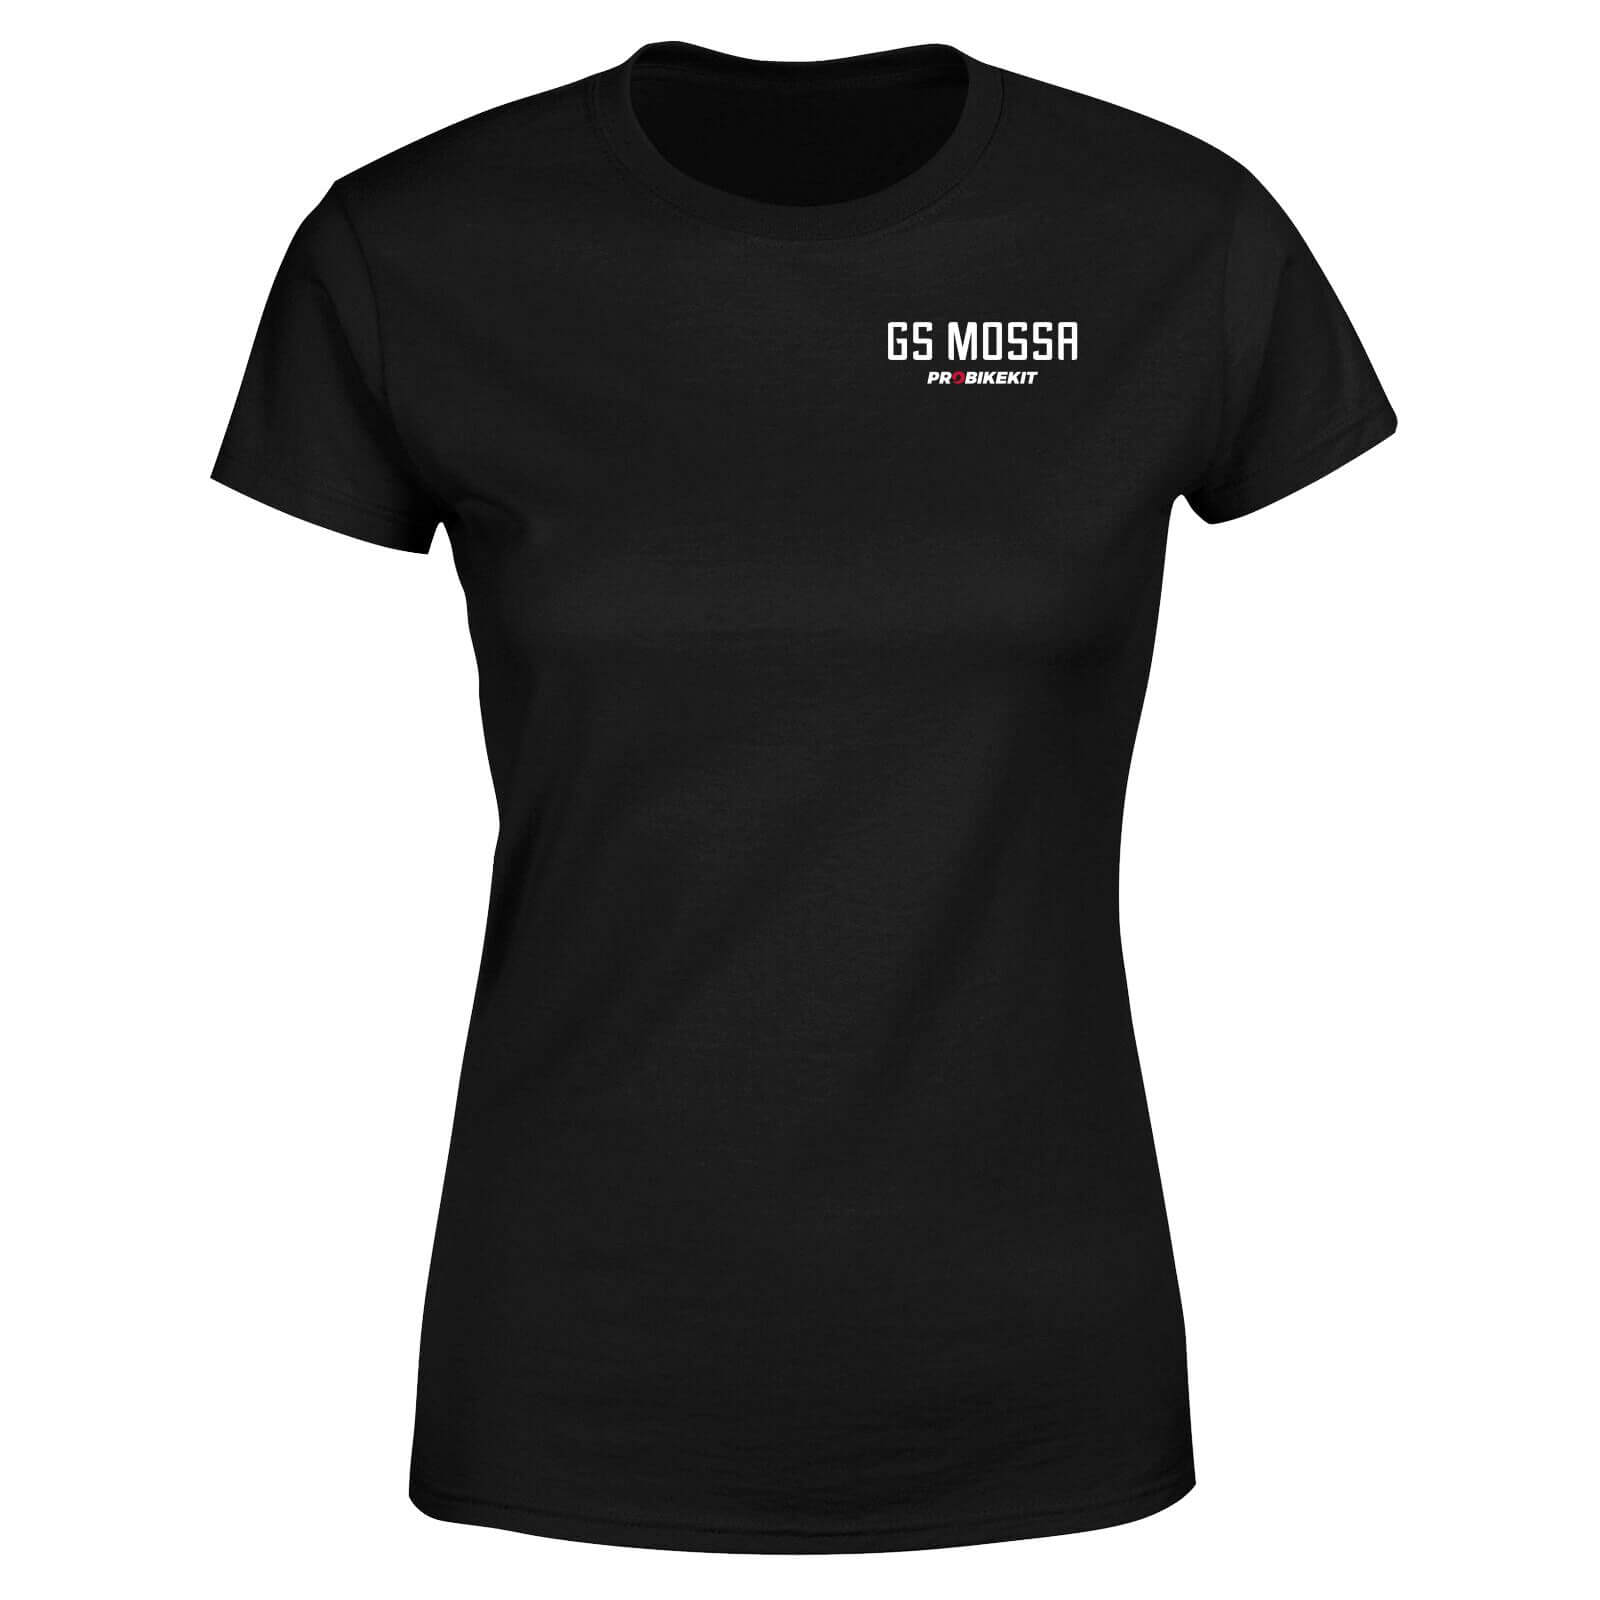 PBK GS Mossa Pocket Print Aqua Wave Women's T-Shirt - Black - XS - Black